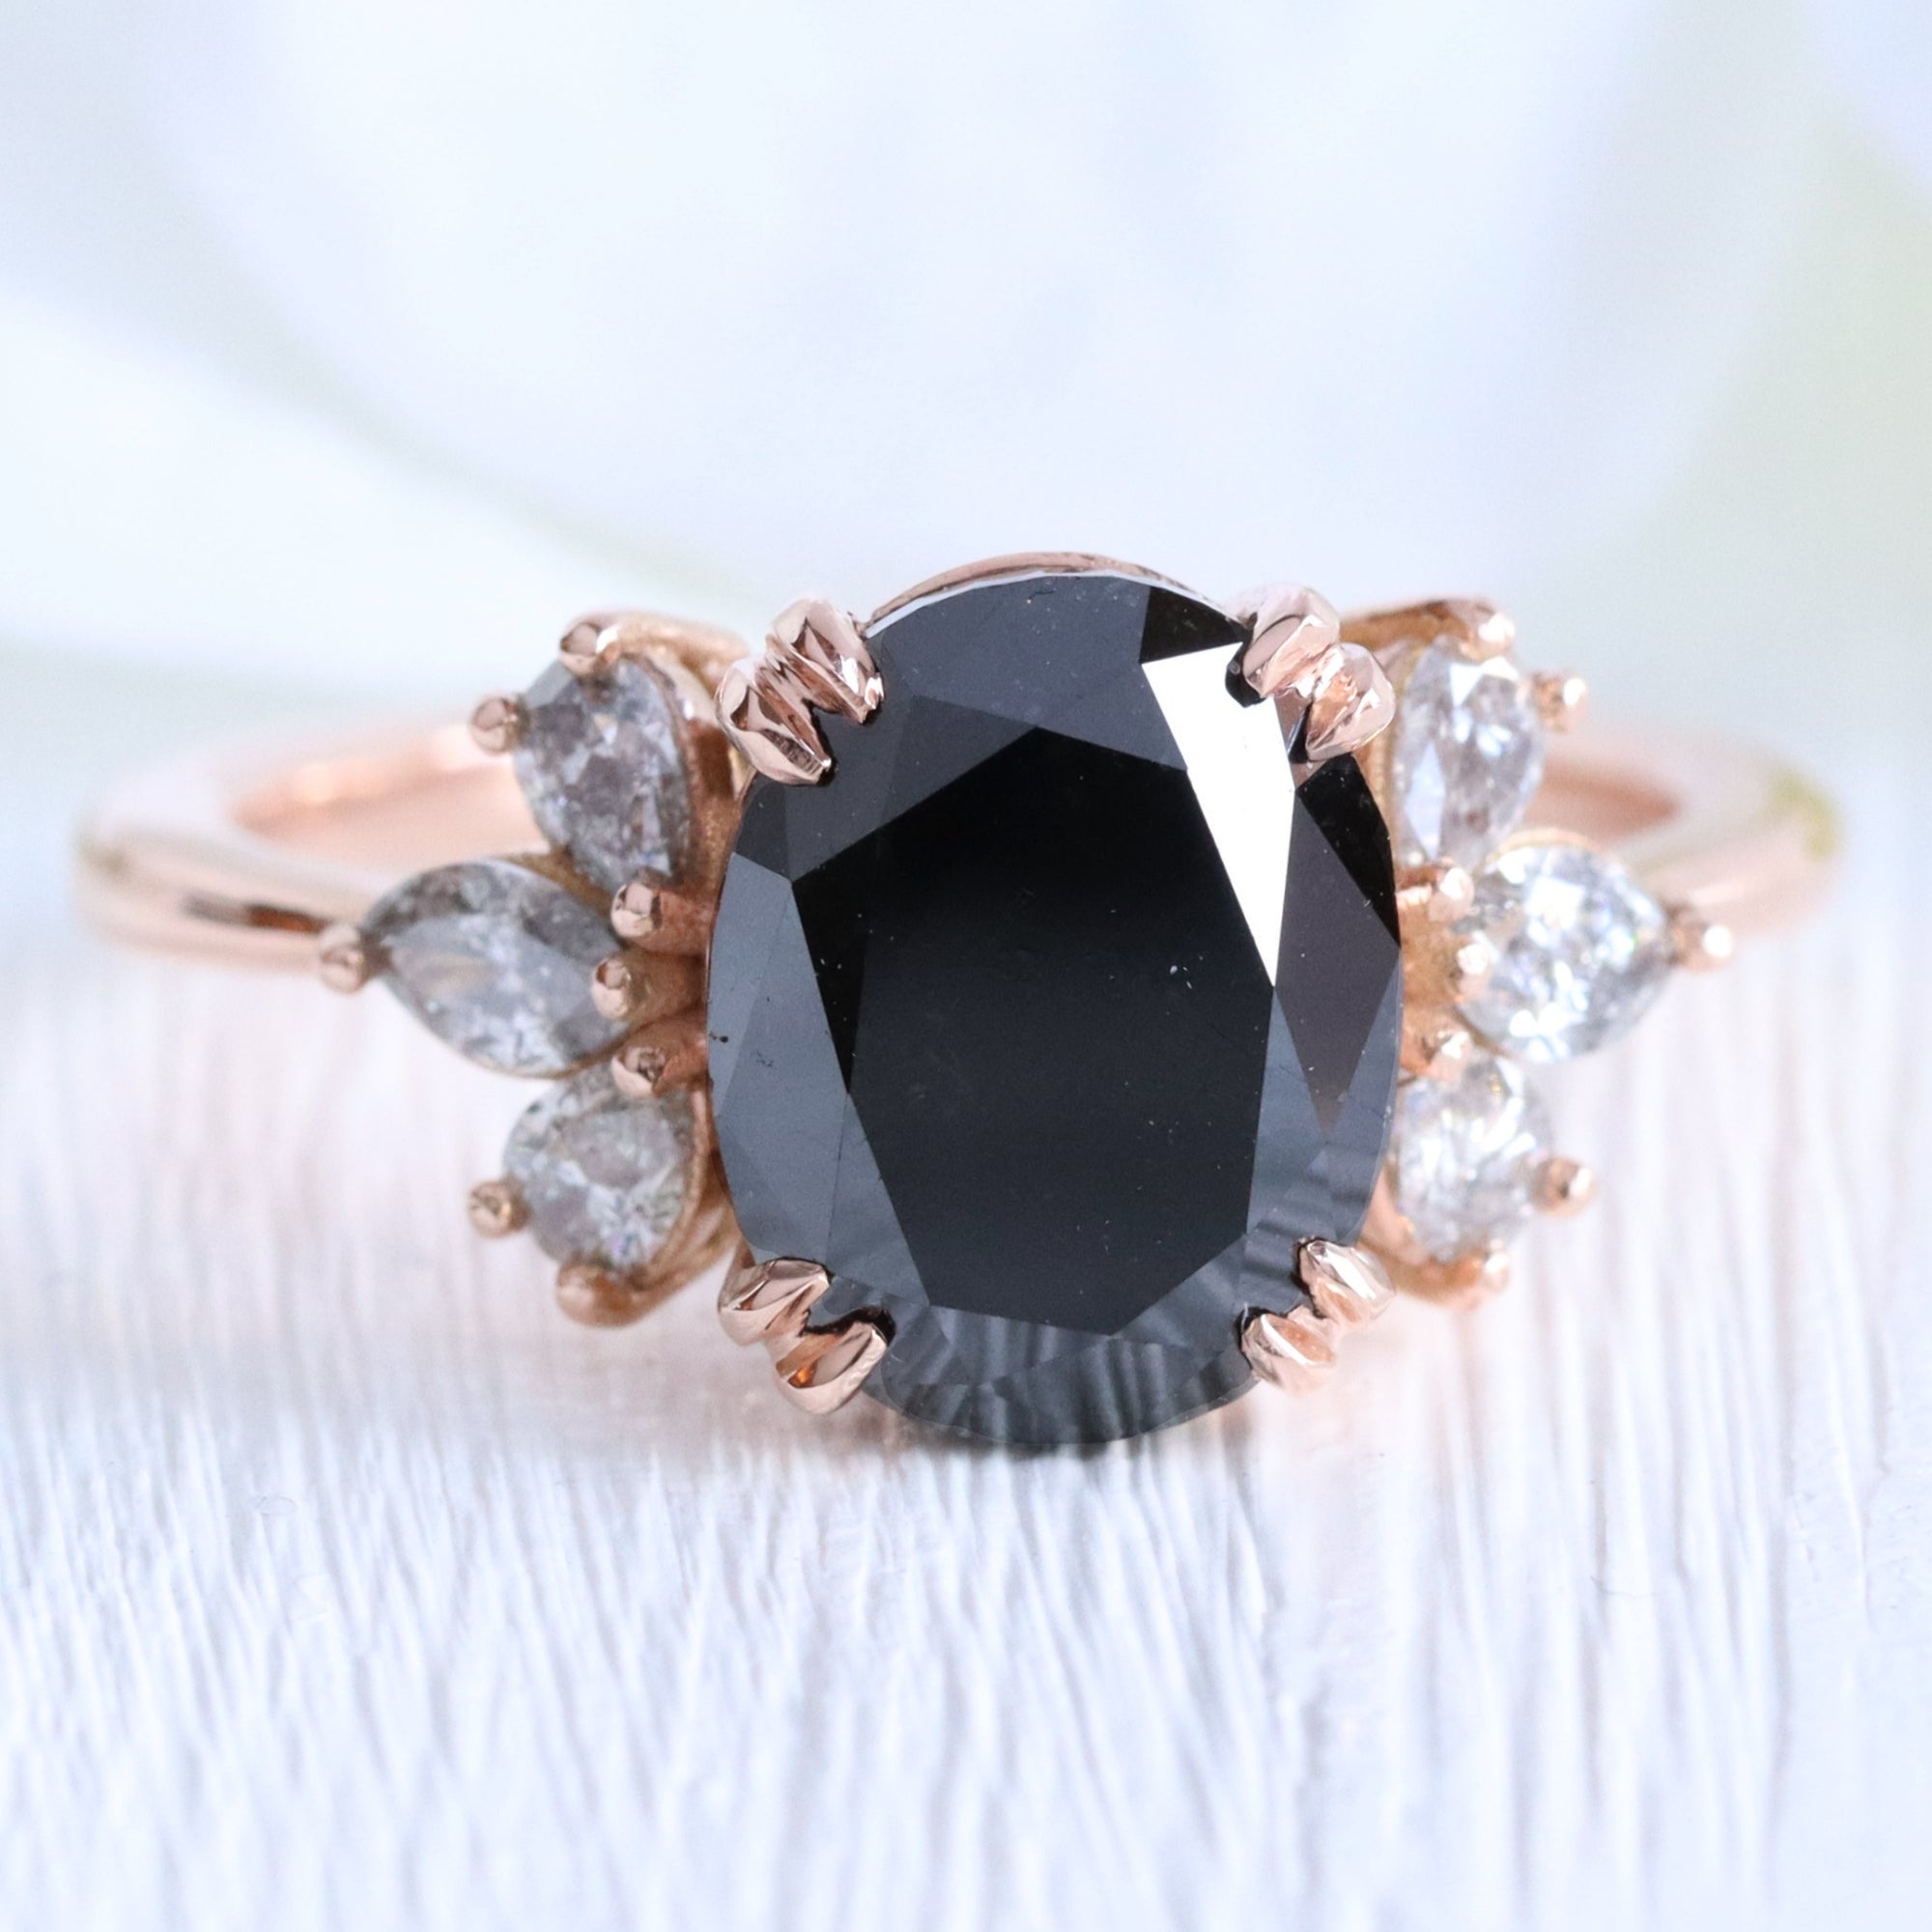 Large oval black diamond ring rose gold 3 stone salt and pepper diamond ring la more design jewelry